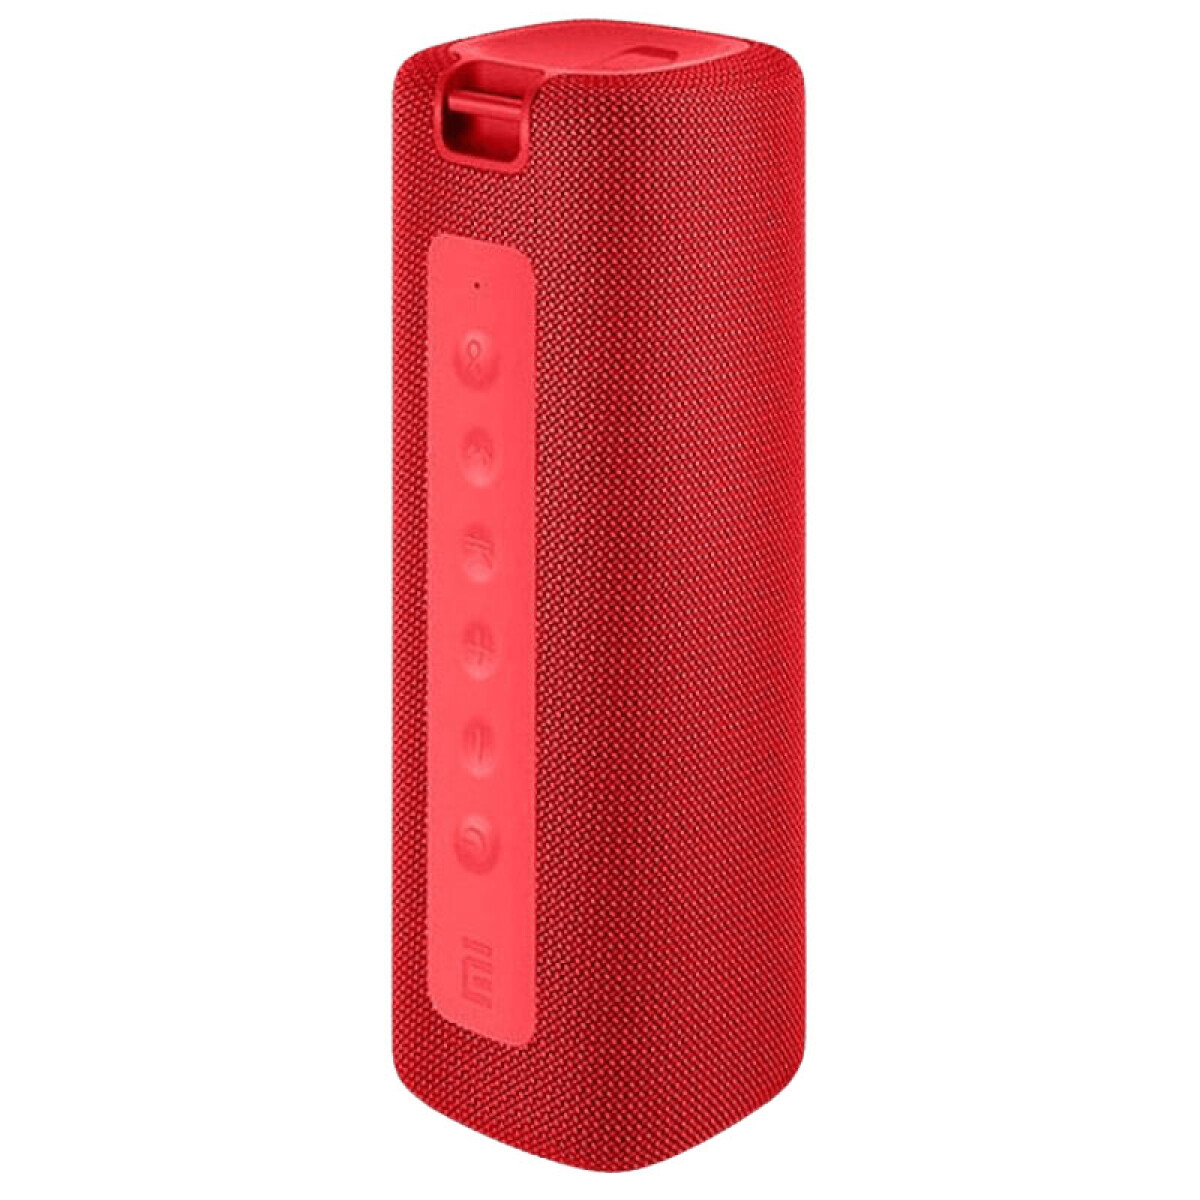 Parlante Xiaomi Mi Portable Bluetooth Speaker 16w Red 